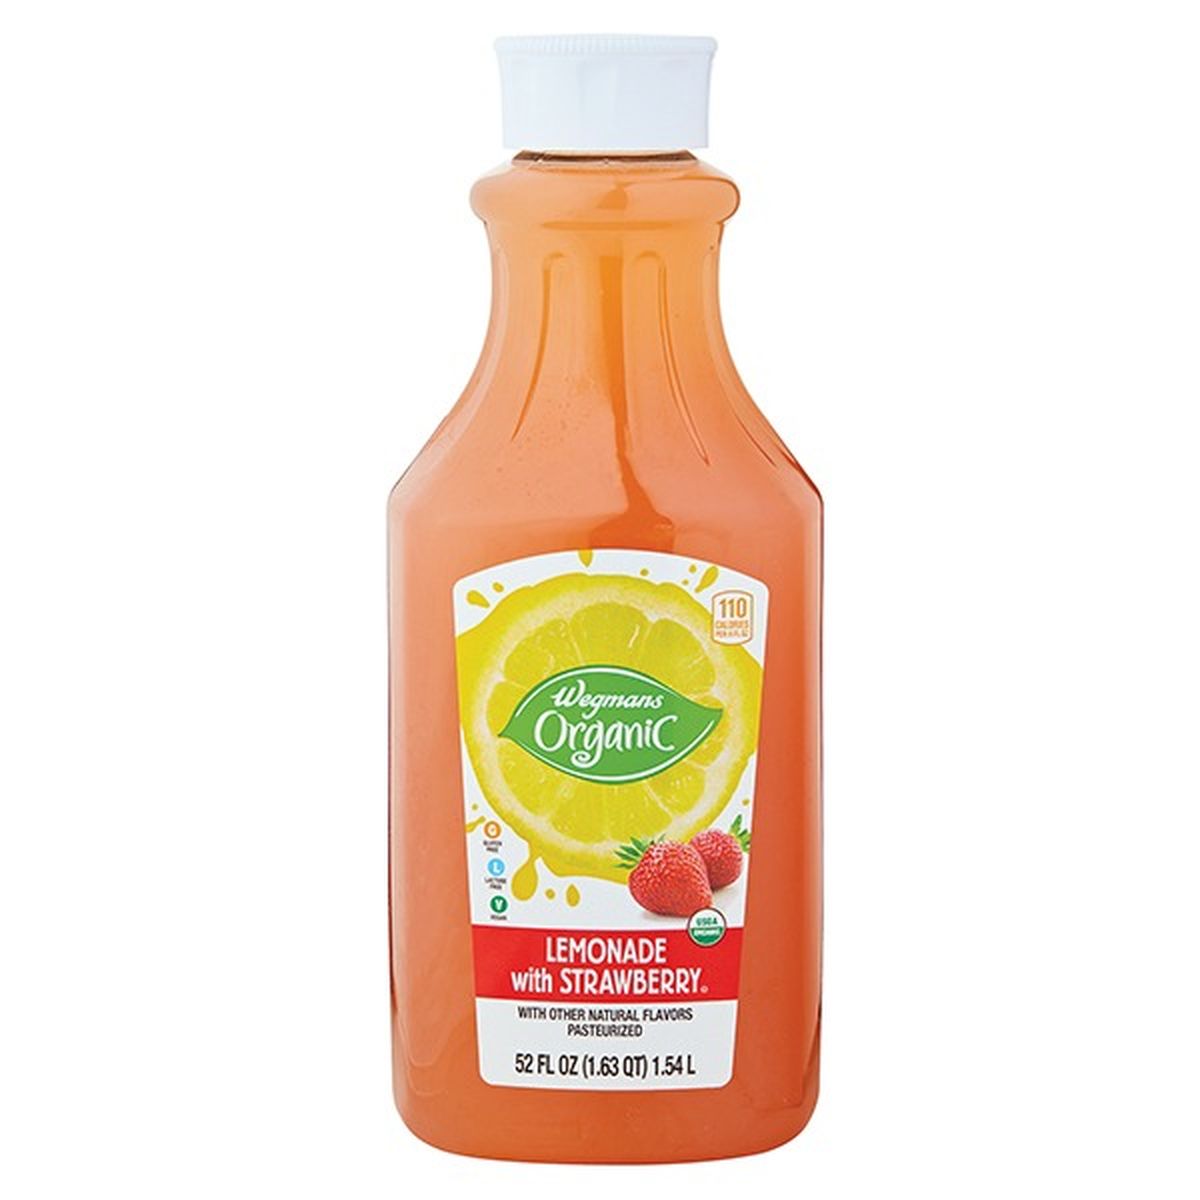 Calories in Wegmans Organic Lemonade with Strawberry